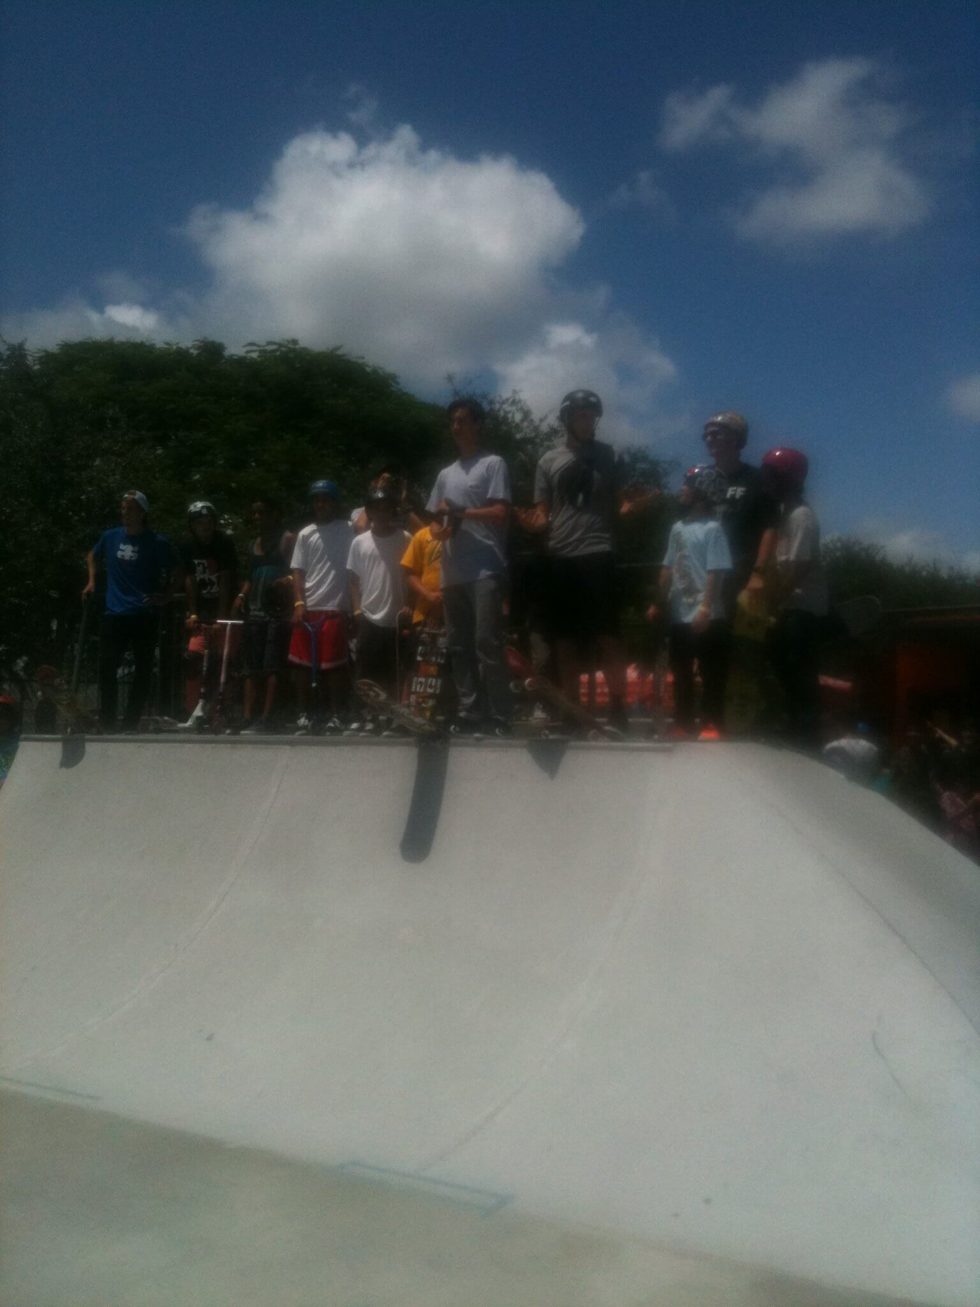 Riley Hawk and Tony Hawk skateboarding in Miami, August 2011